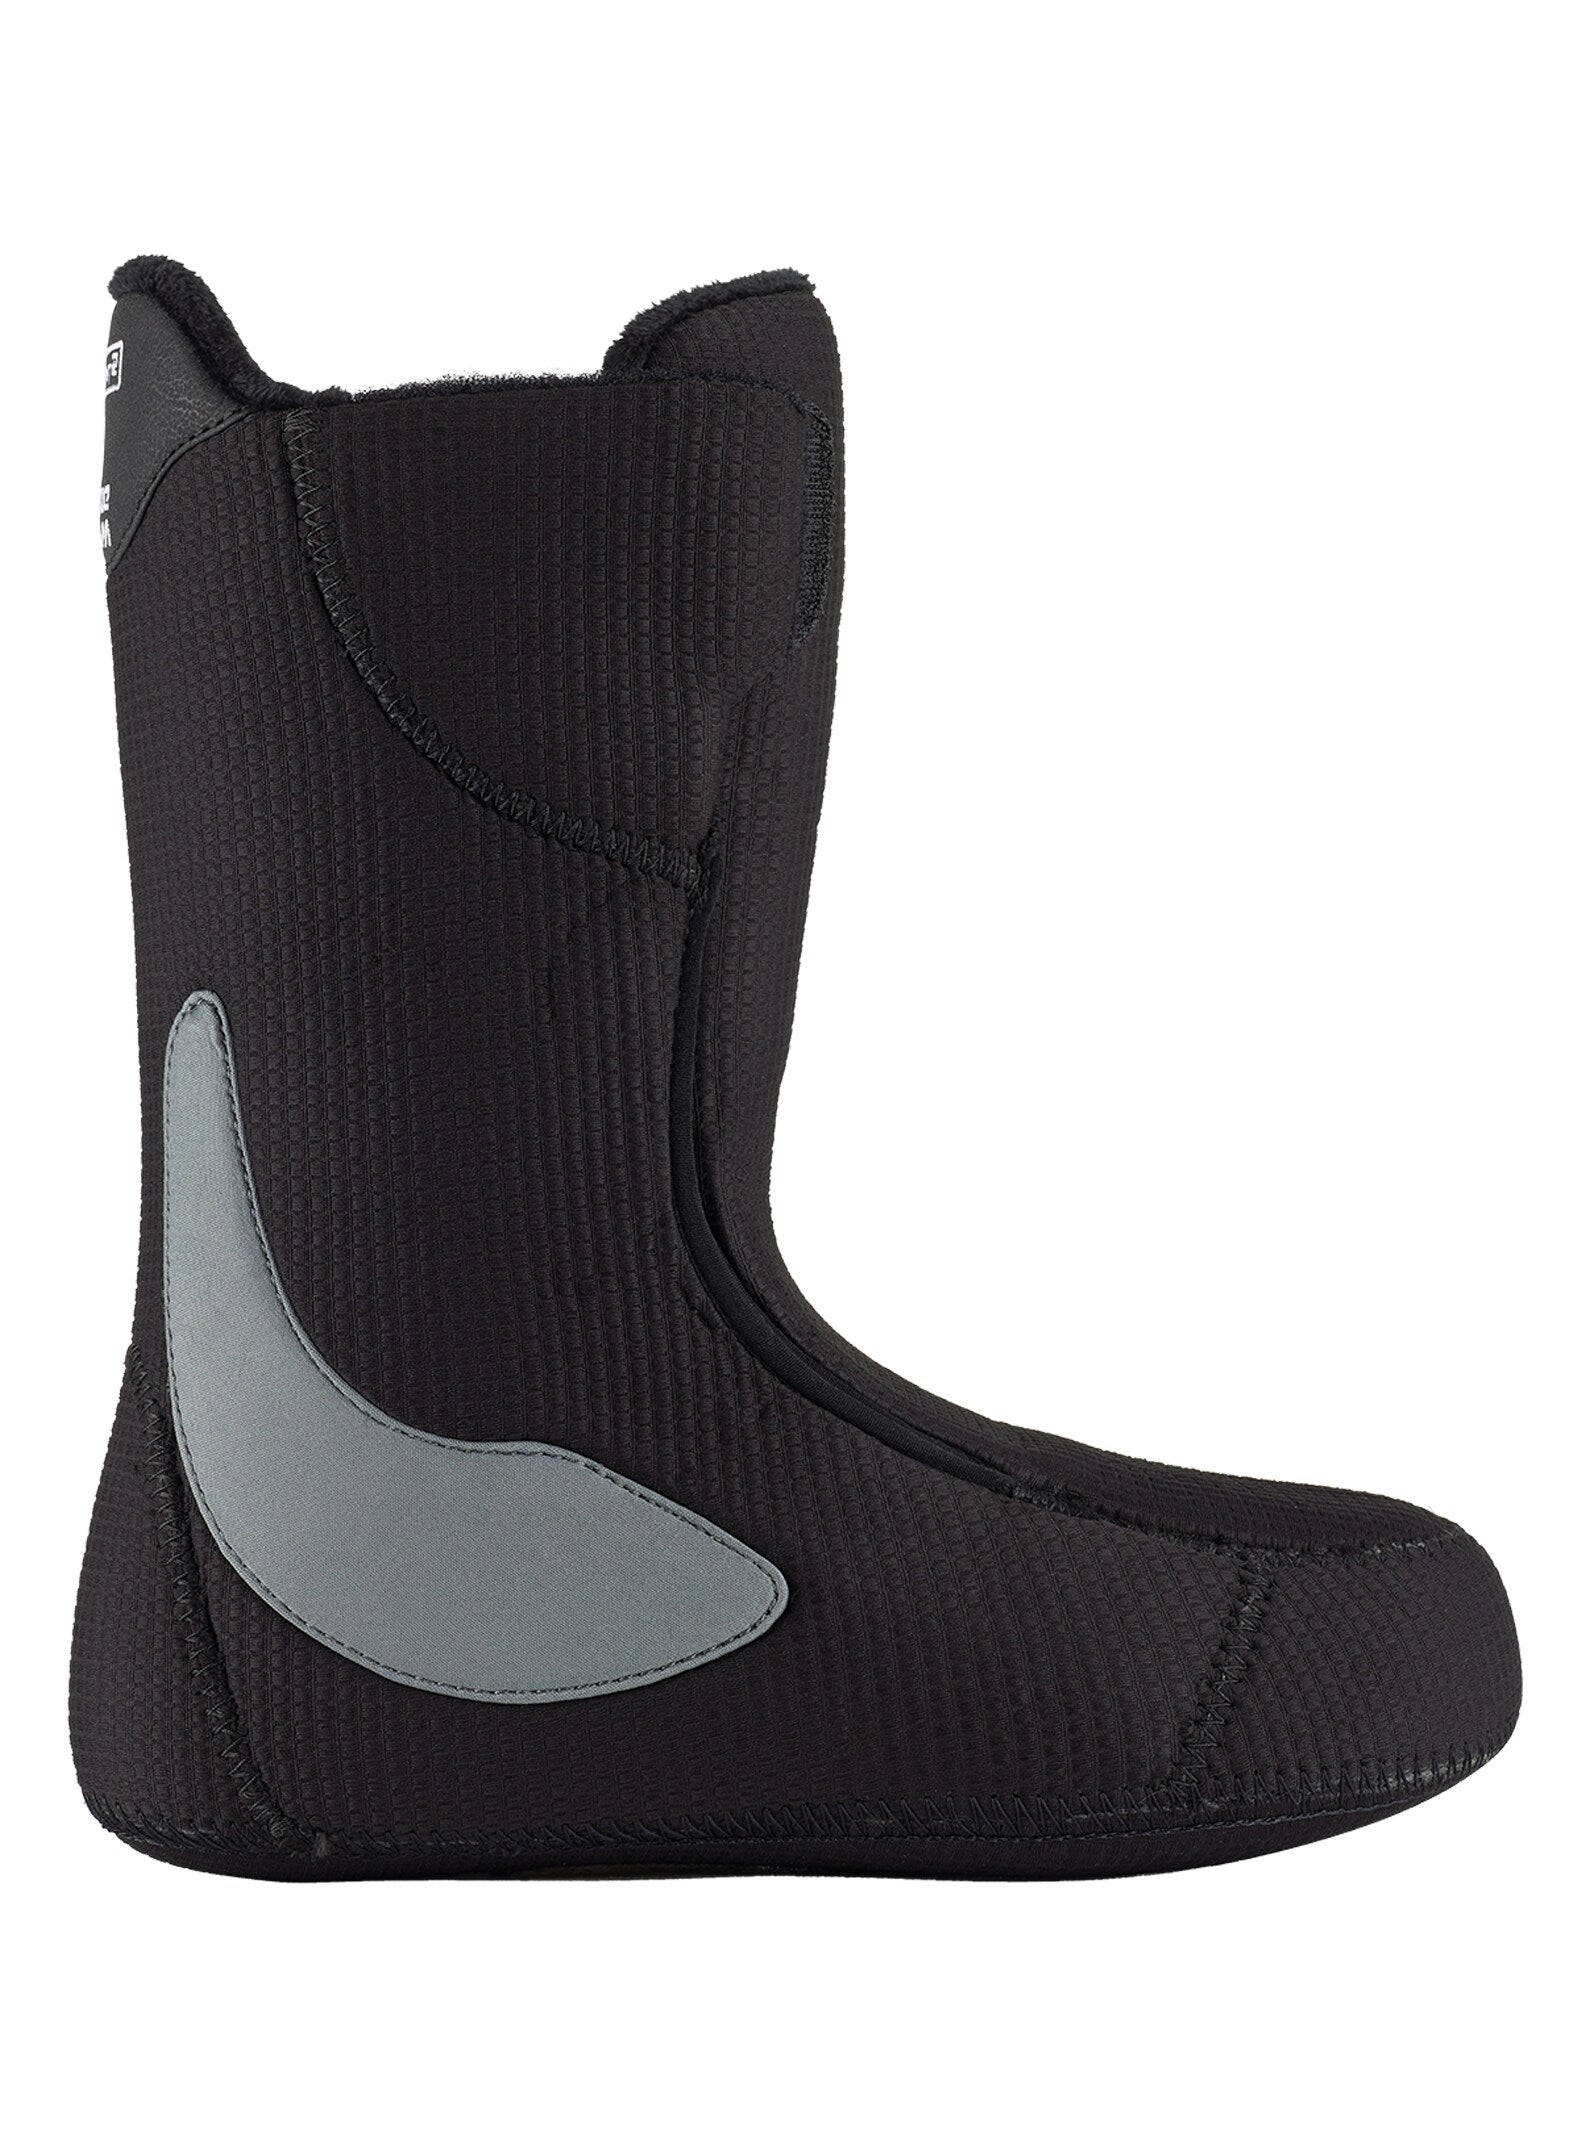 Men's Ruler BOA® Snowboard Boots, Black